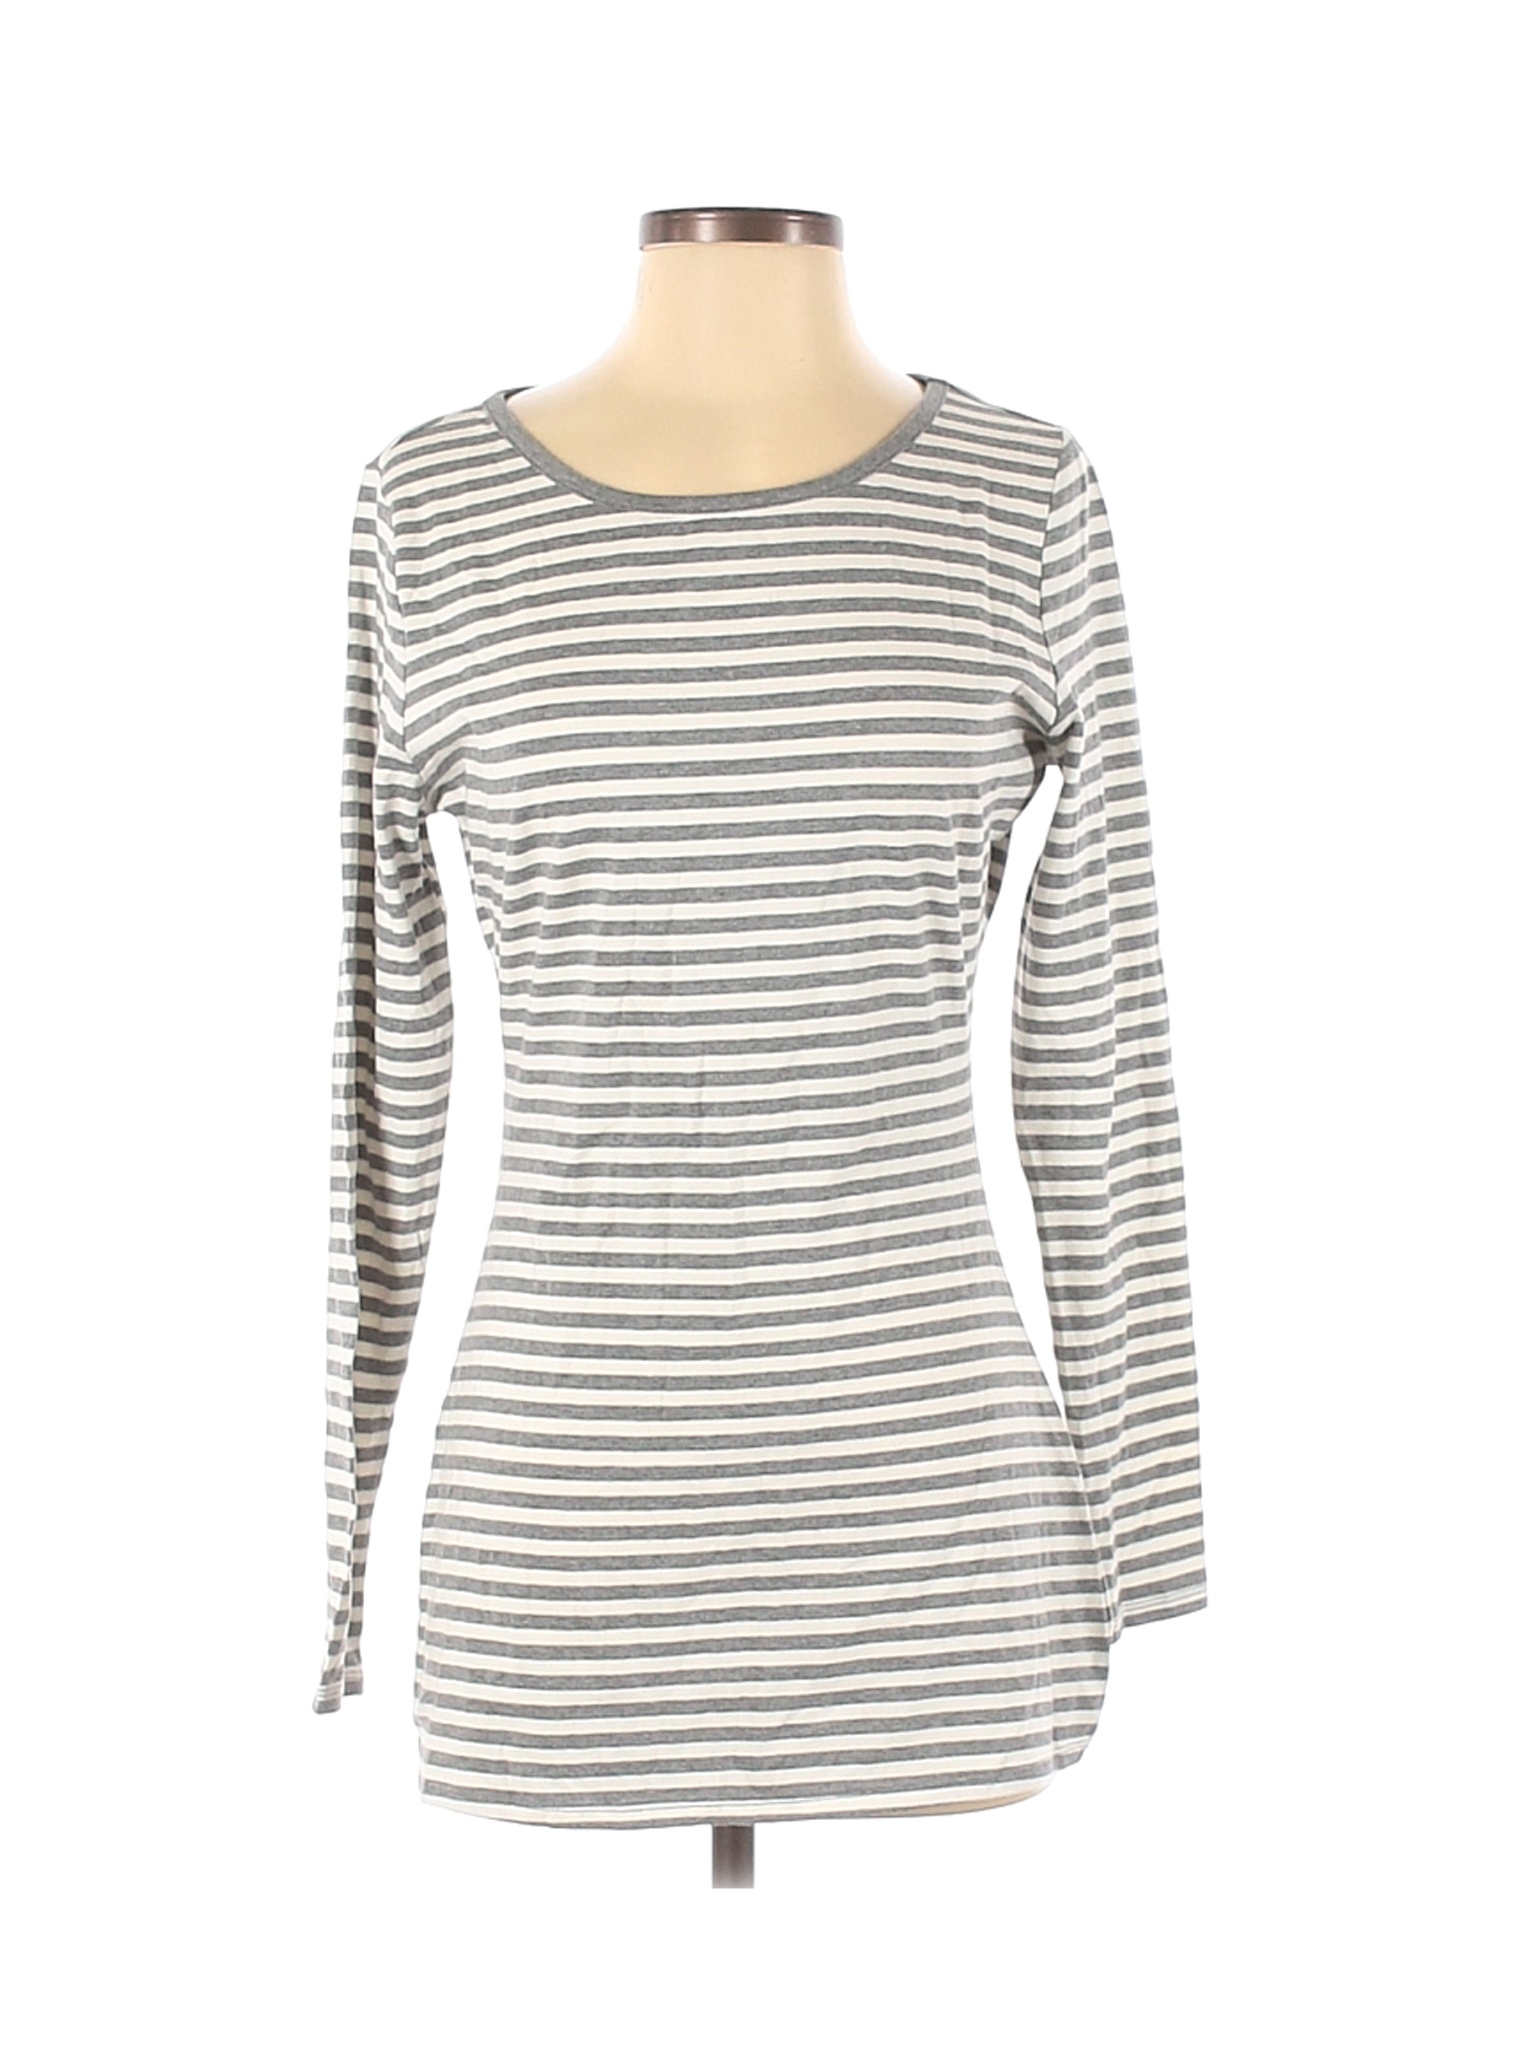 NWT Matilda Jane Women Gray Long Sleeve T-Shirt S | eBay